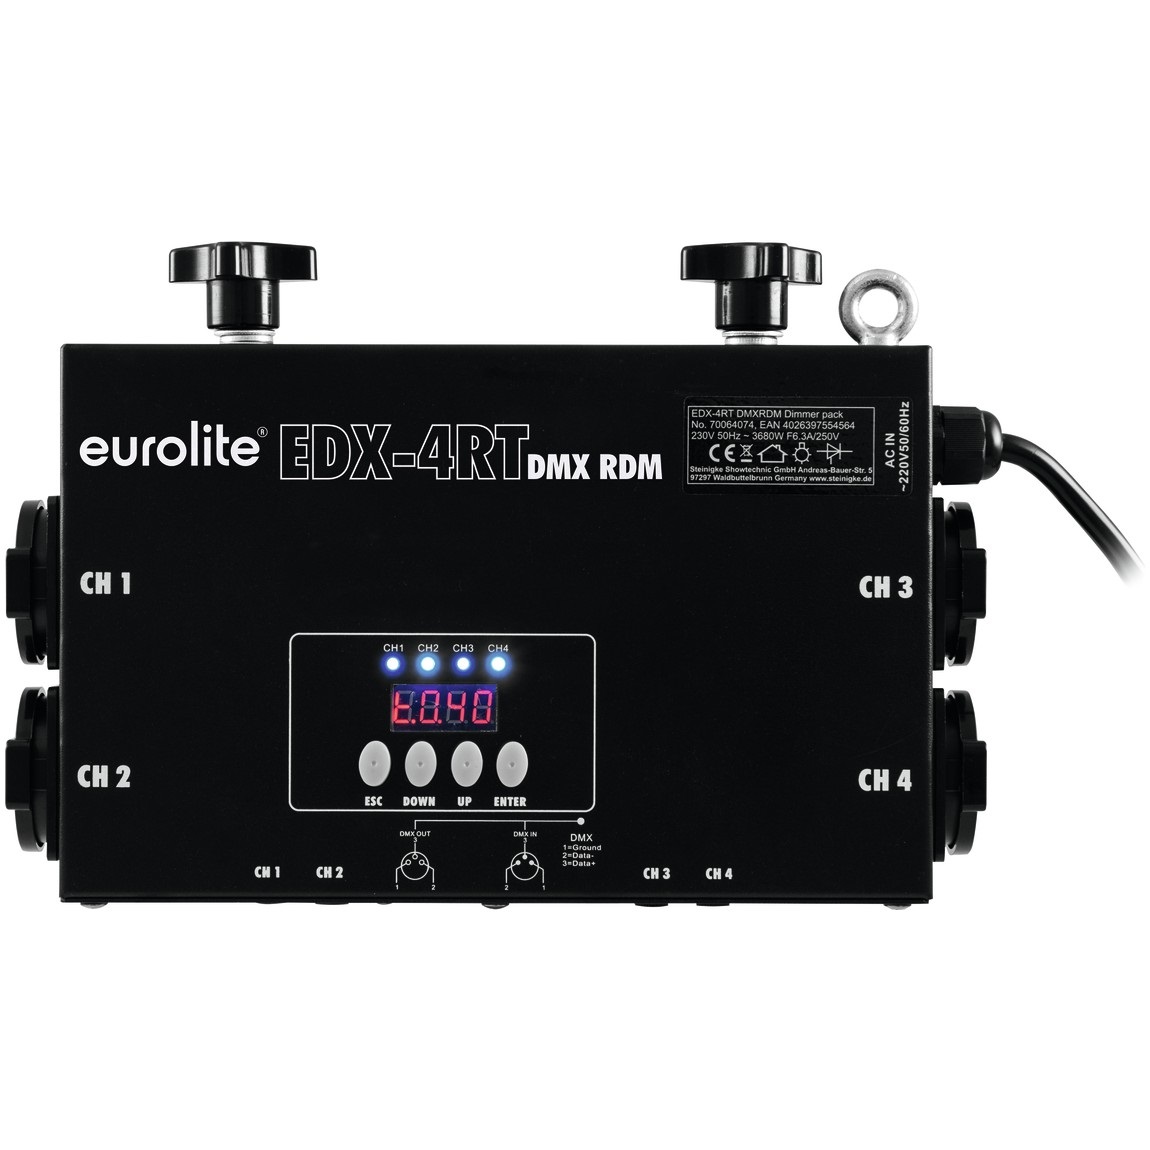 Eurolite EDX-4RT DMX RDM